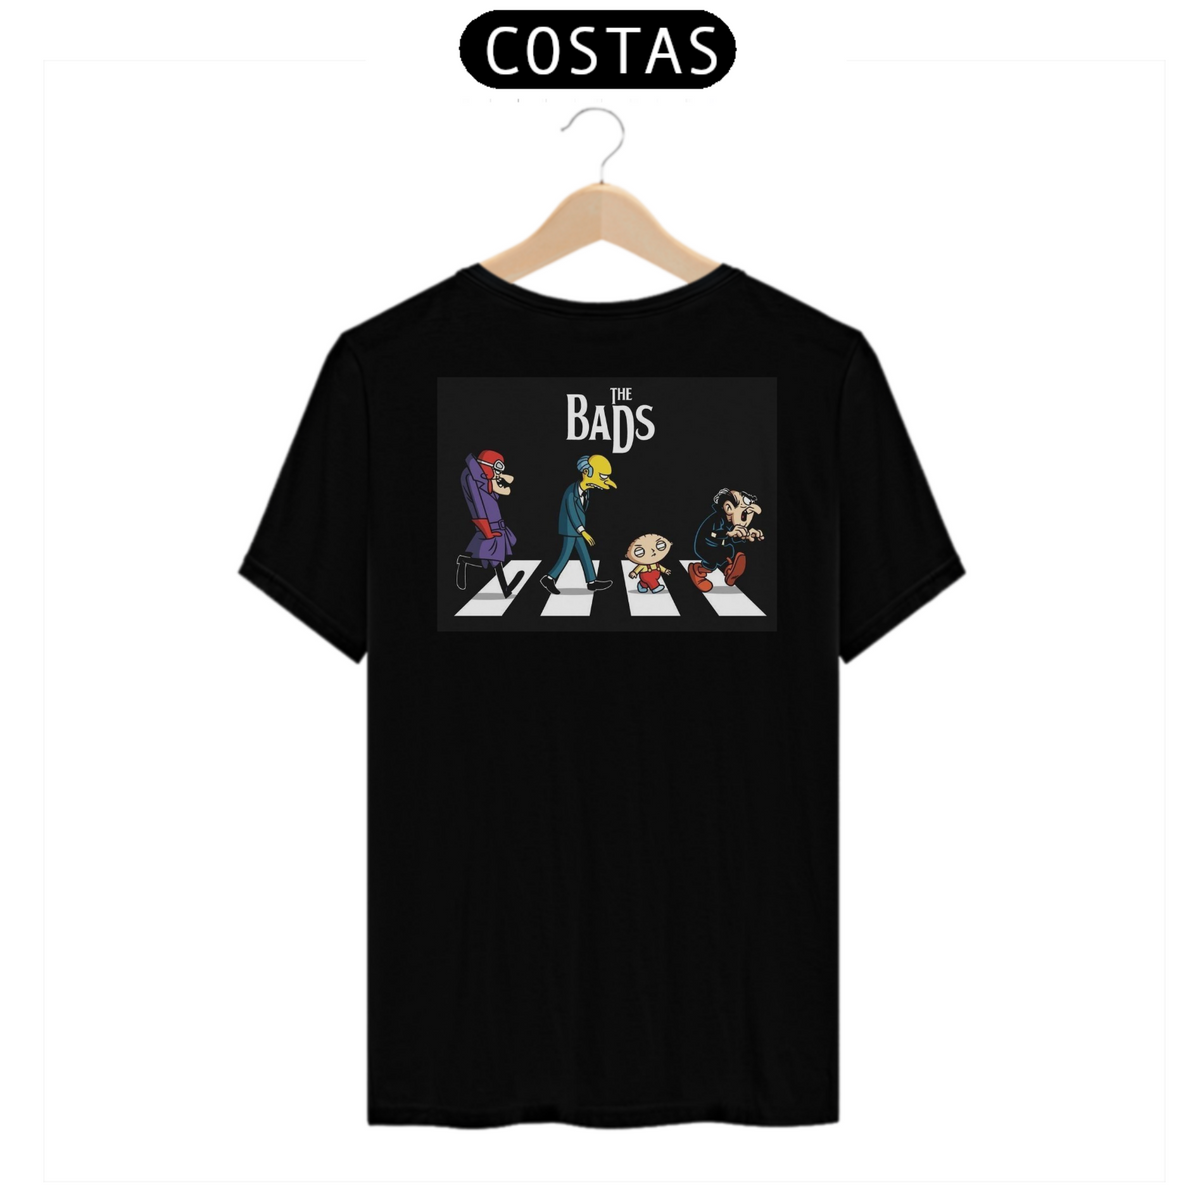 Nome do produto: T-shirt The Bads